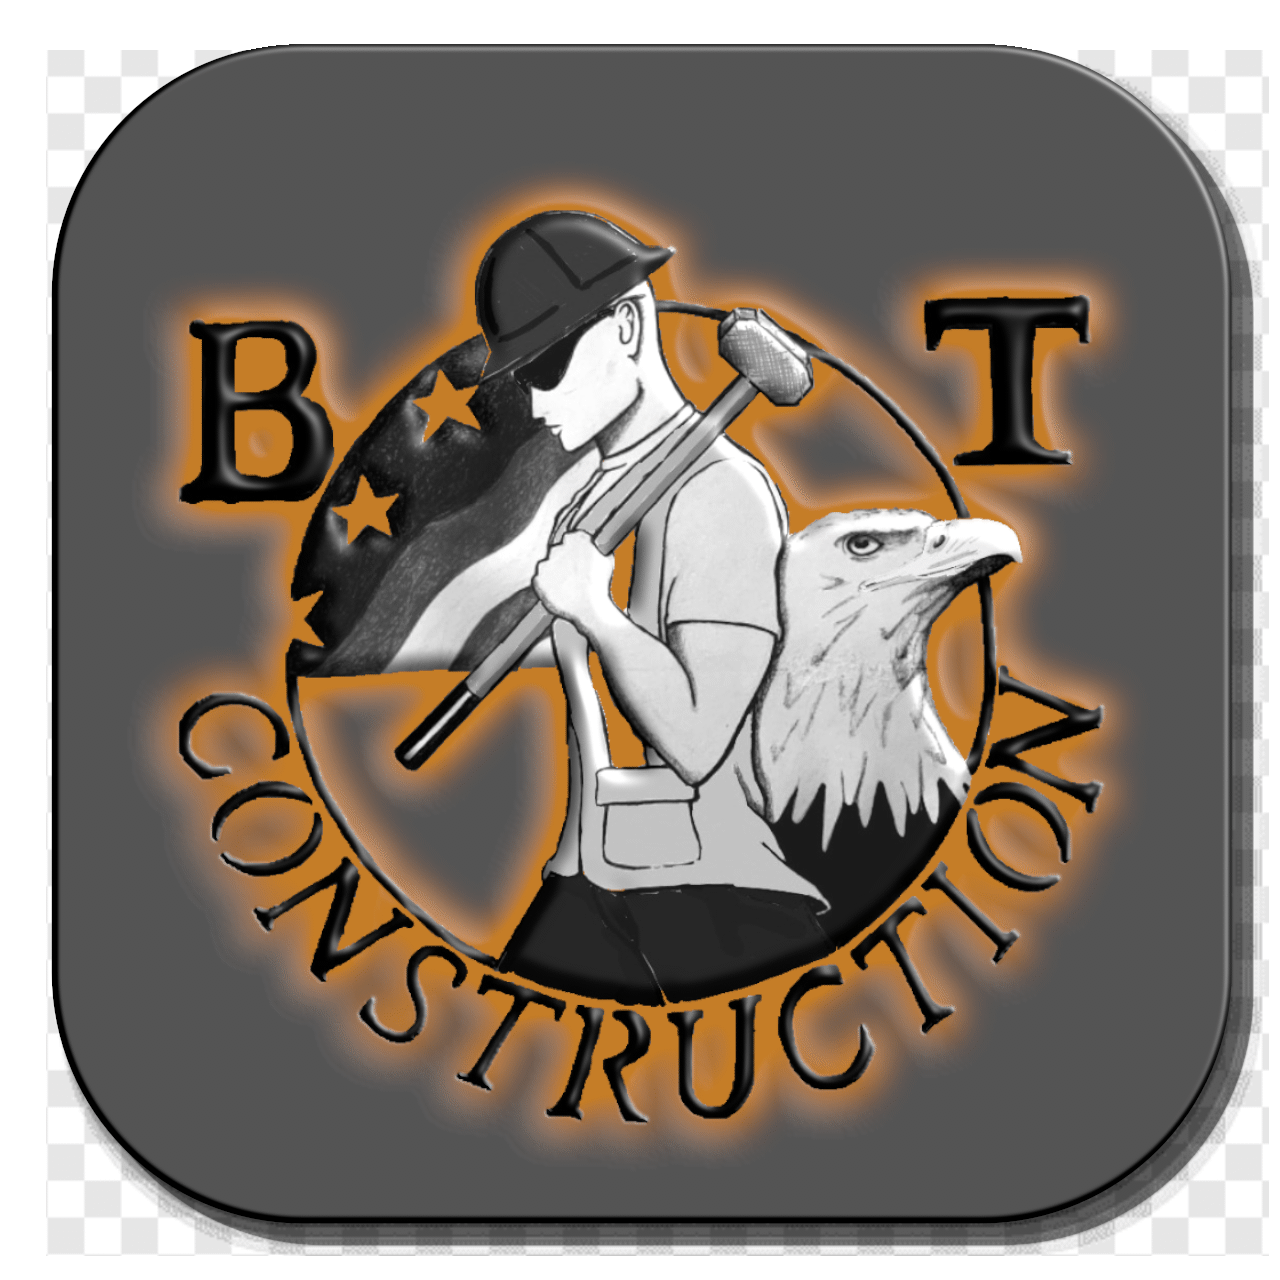 BT Construction